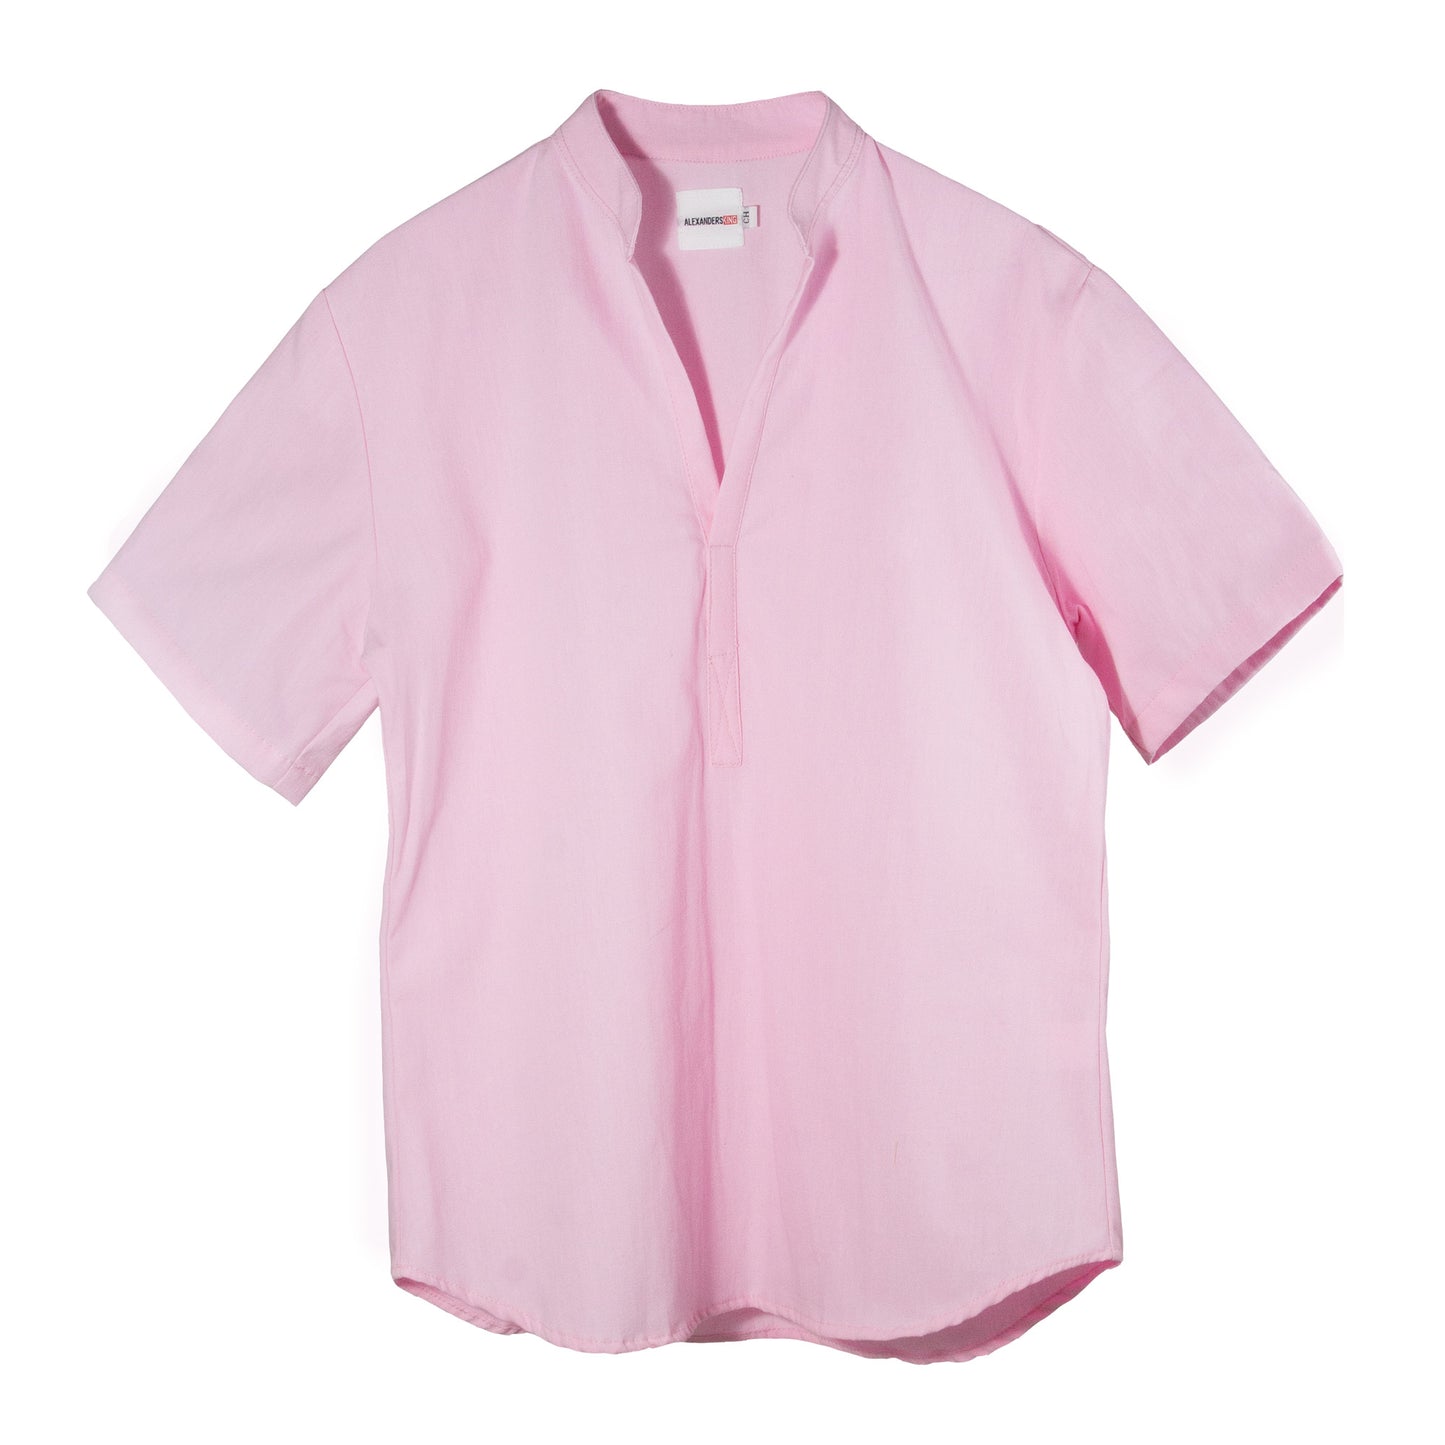 CC0003 Camisa Casual Cuello Mao manta rosa manga corta